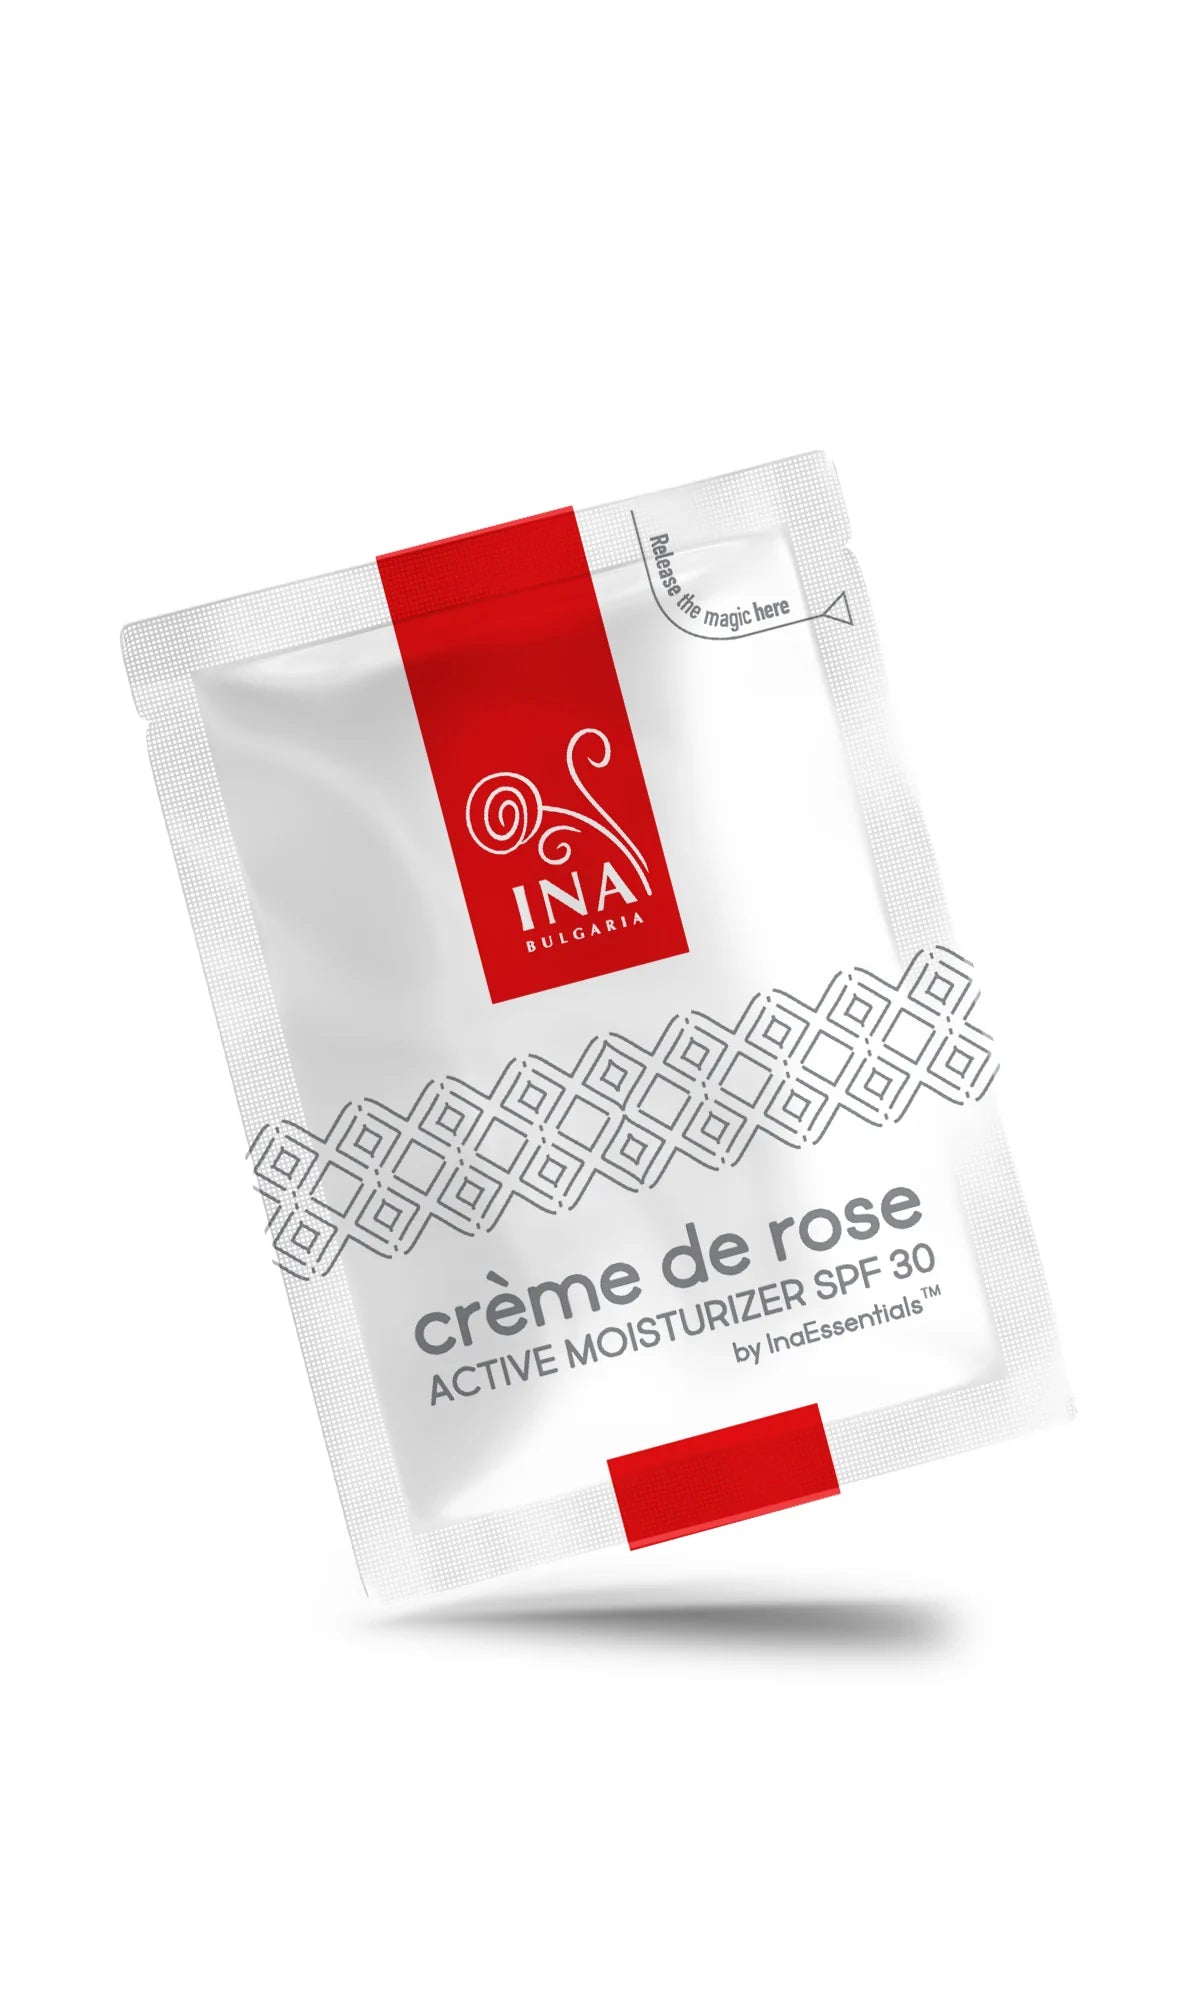 Crème de rose - Active Moisturizer SPF 30 met Bio Rozen Olie 2ml